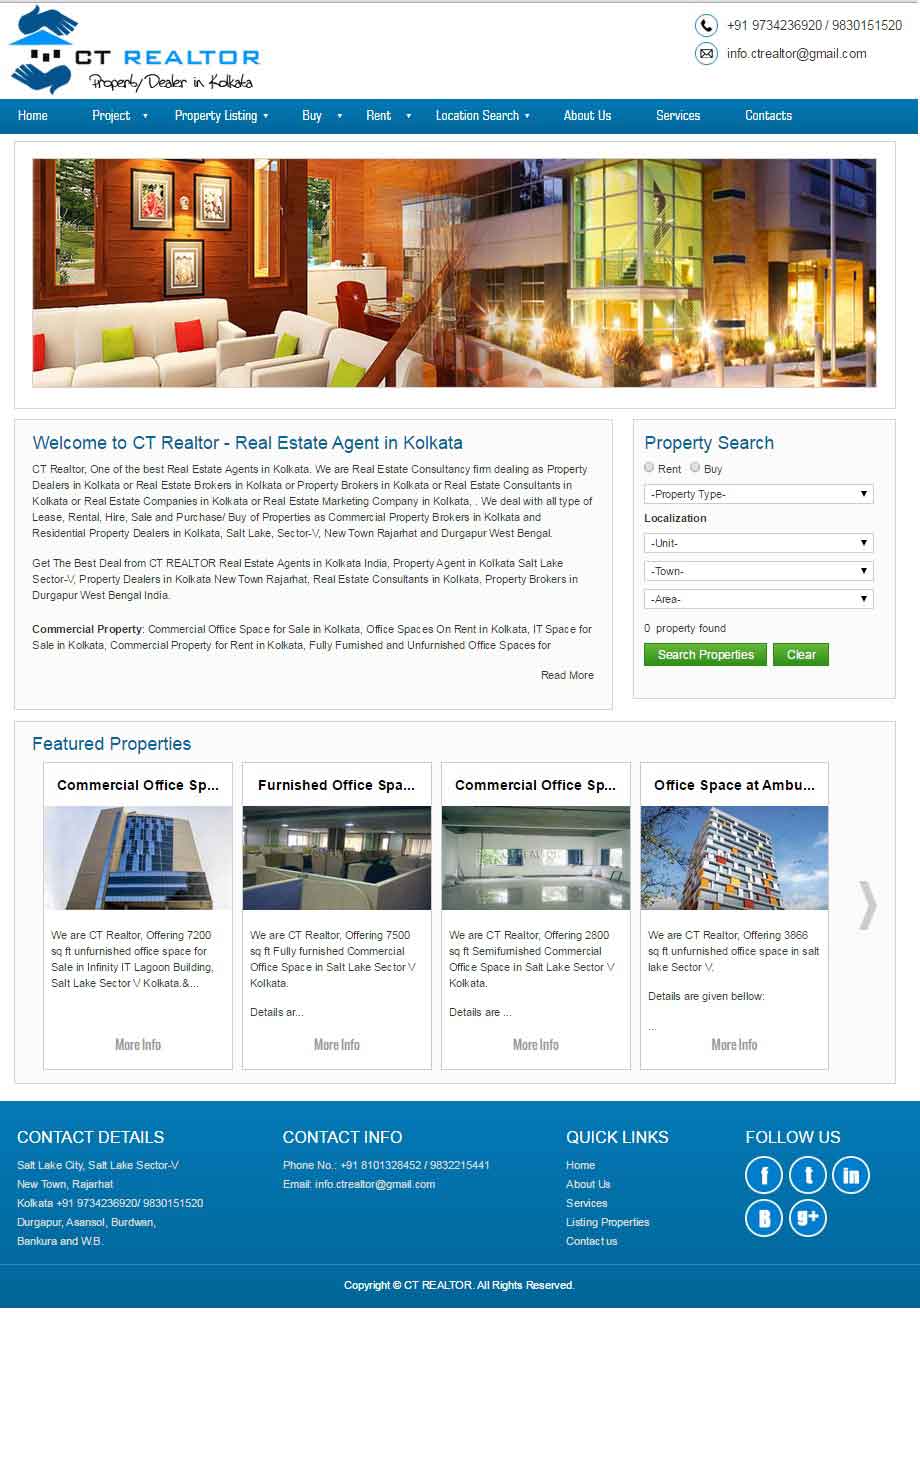 Visit CT Realtor - Real Estate Agency in Kolkata Website